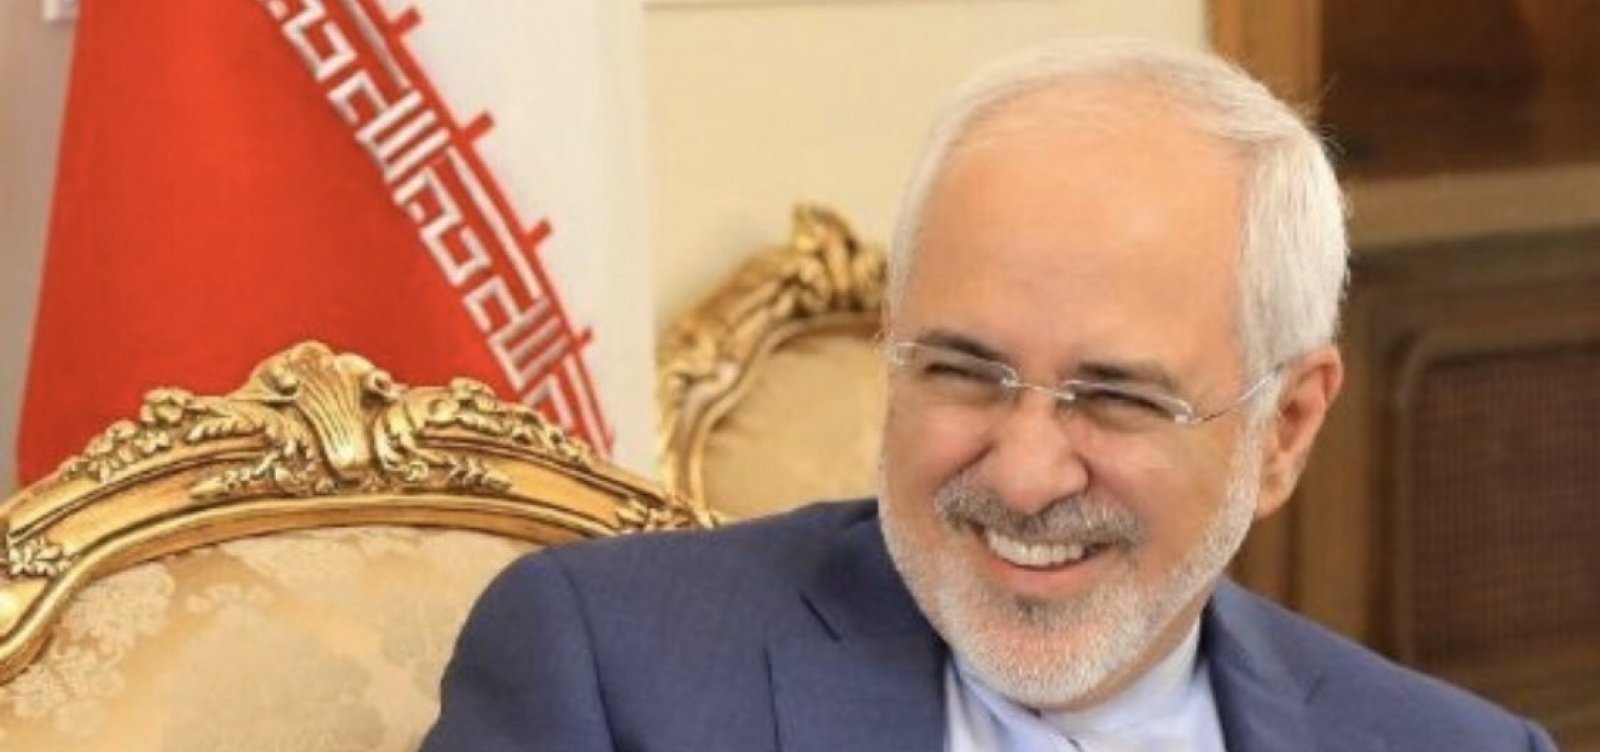 Chanceler do Irã diz que ataque a base dos EUA no Iraque foi ato de ‘legítima defesa’